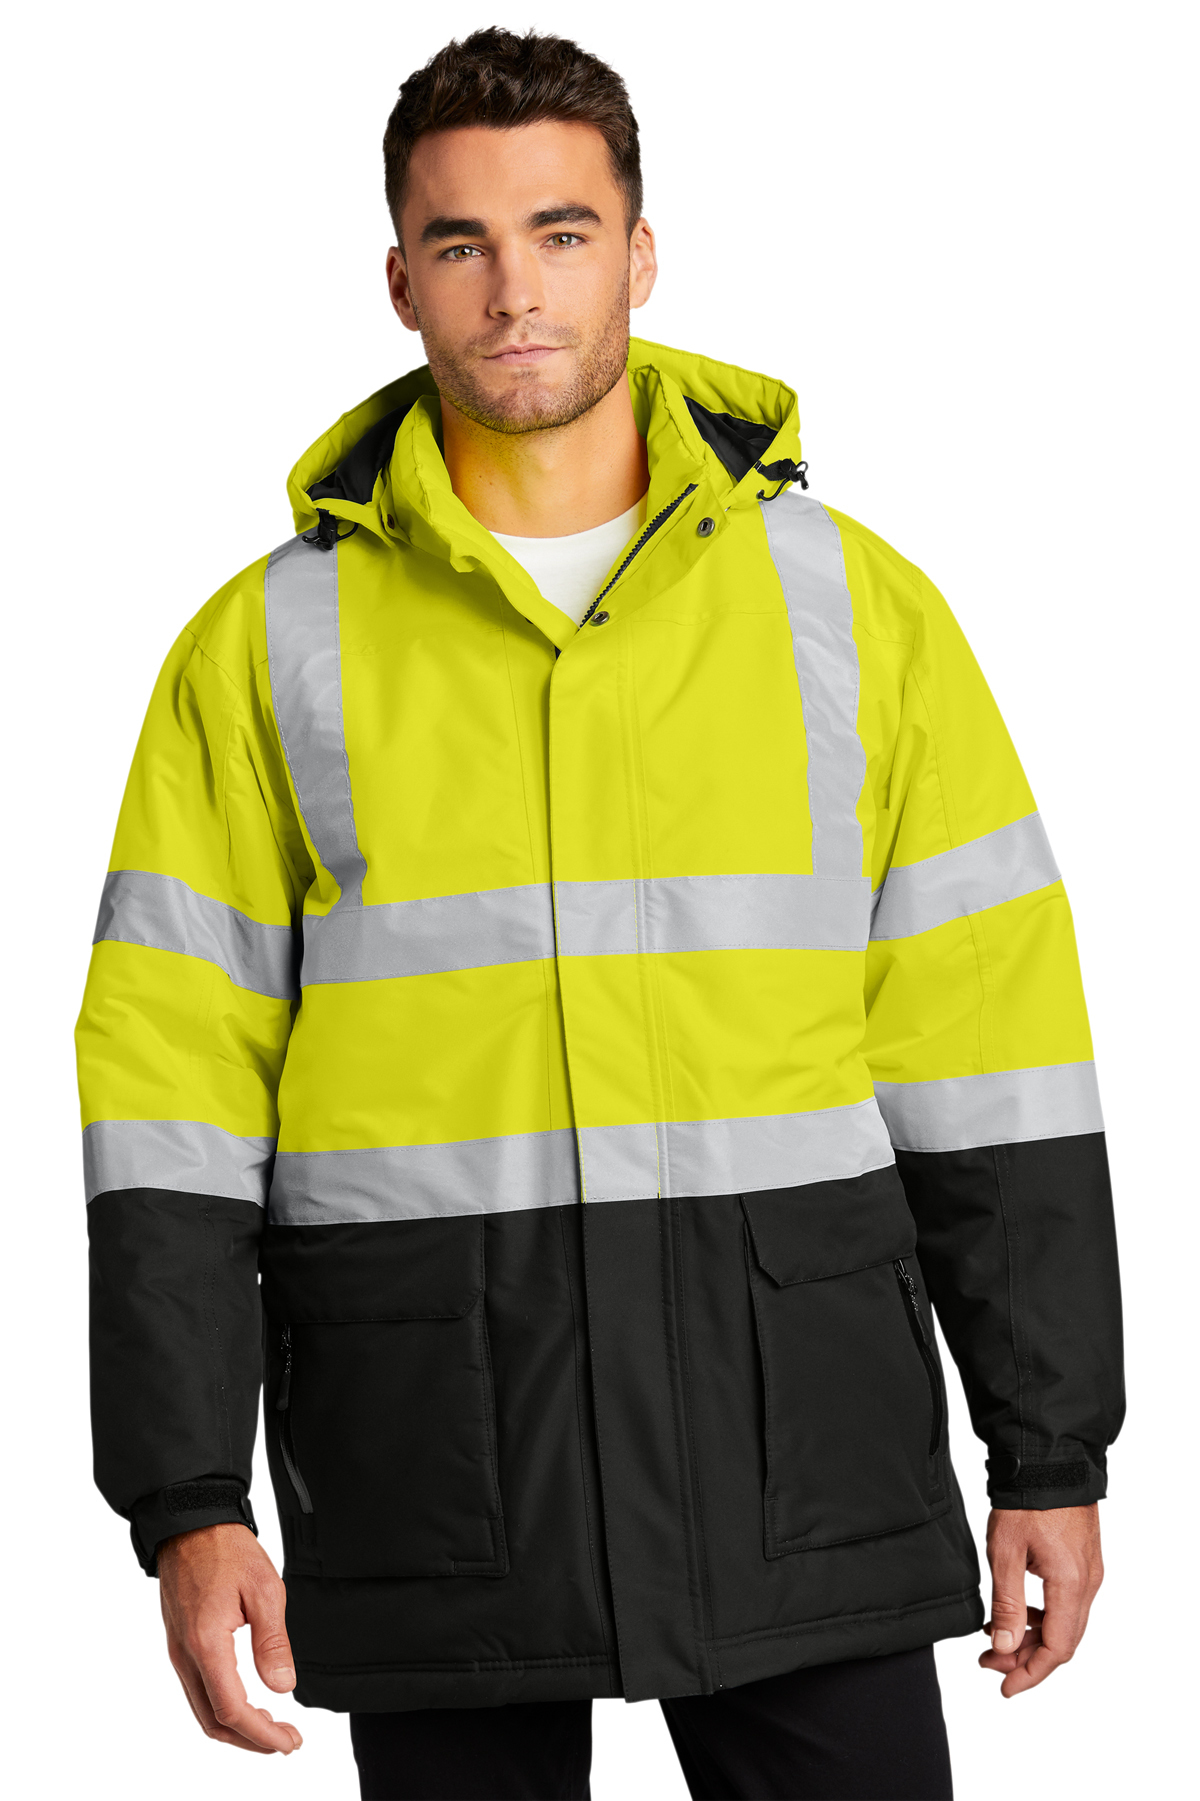 Hi-Vis Class 3 Safety Long Jacket Neon Reflective Rain Coat Hooded Work Parka 